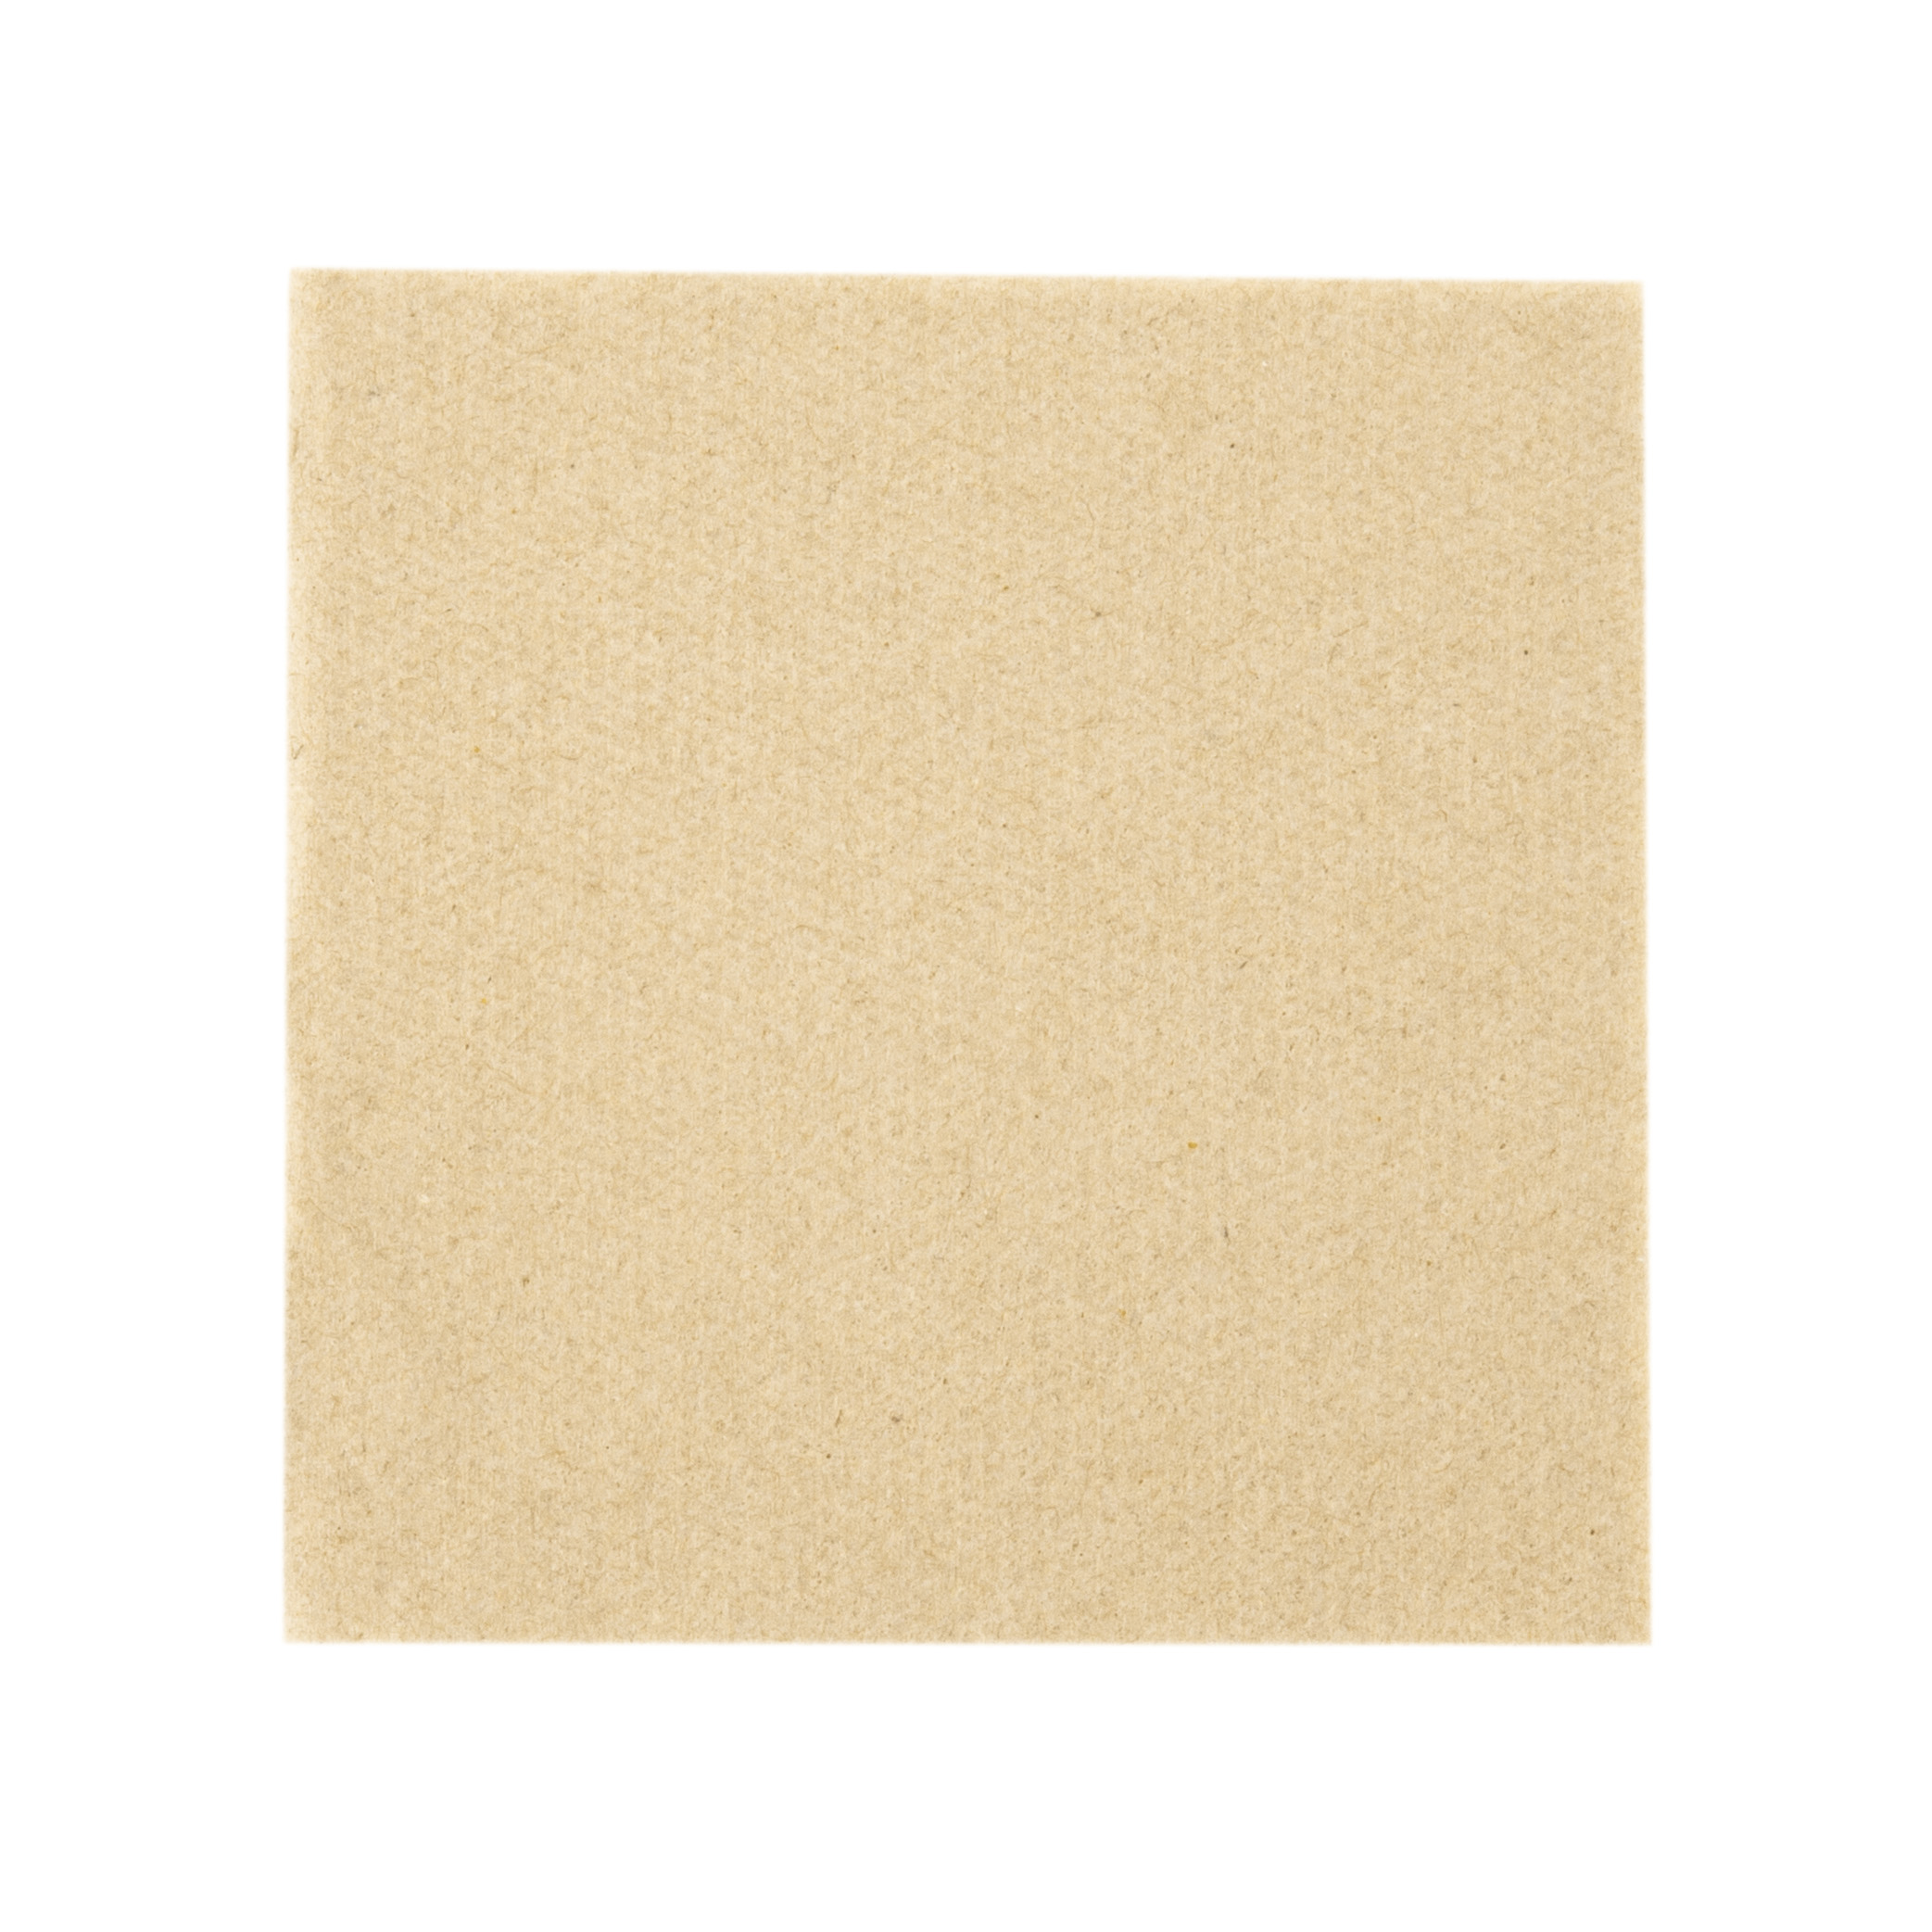 Mank Serviette Softpoint 1/4 Falz, 20 x 20 cm, Basic sand